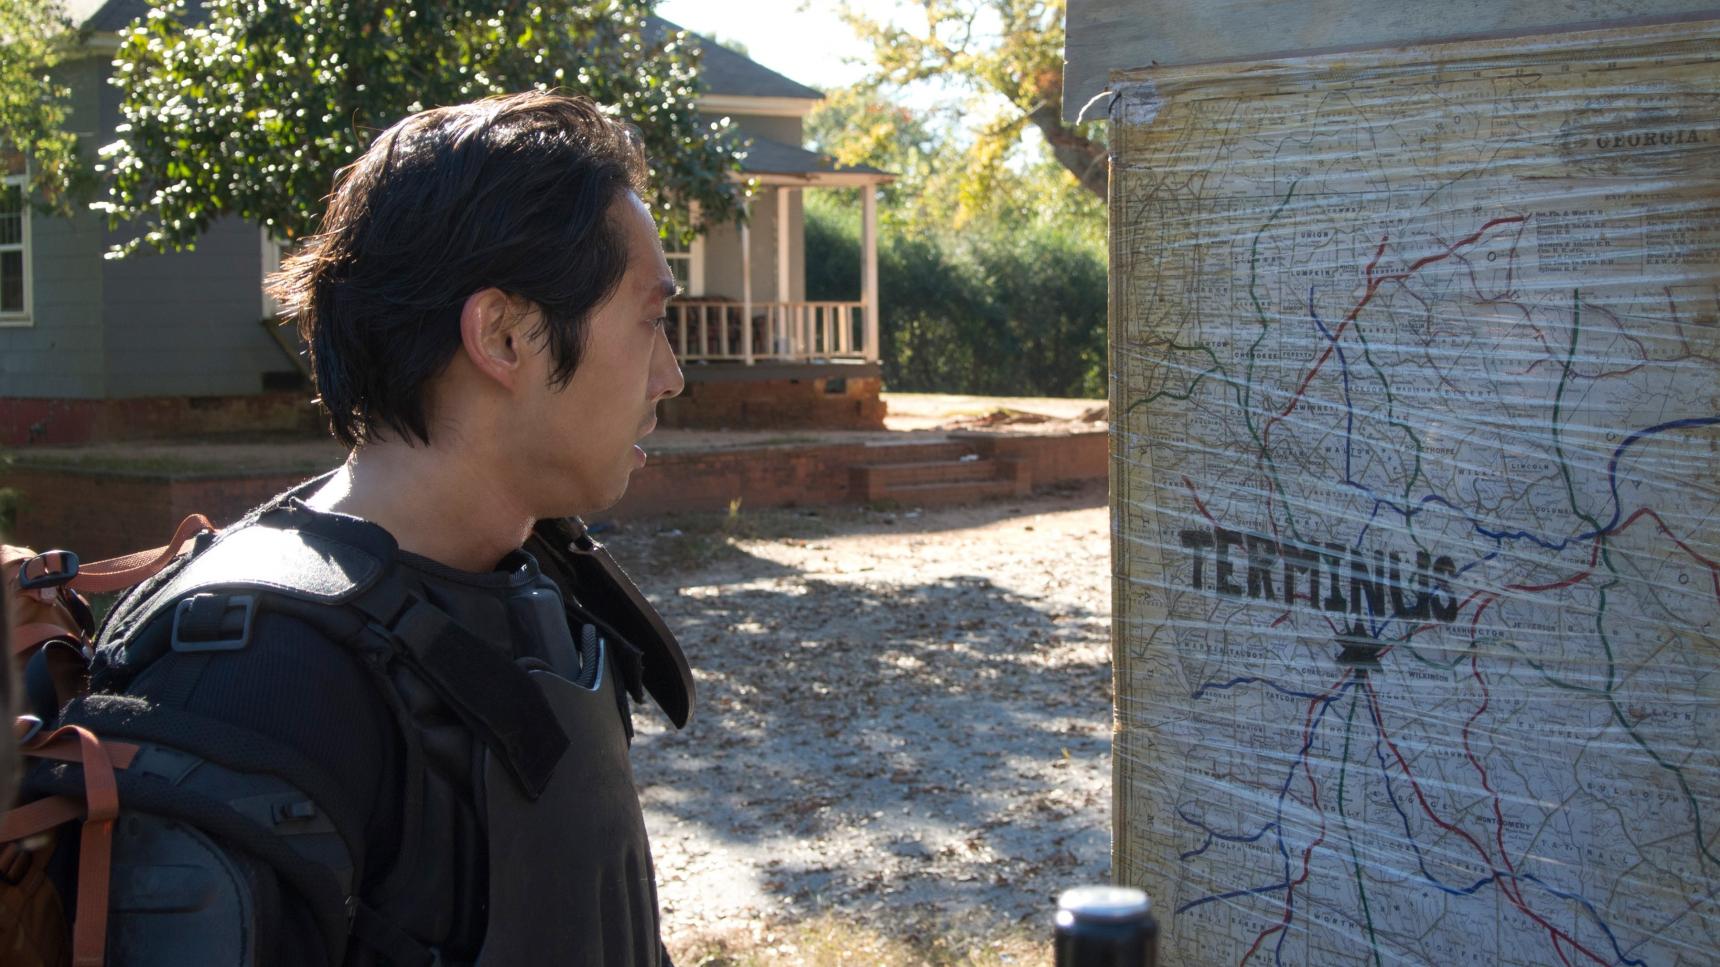 Poster del episodio 13 de The Walking Dead online